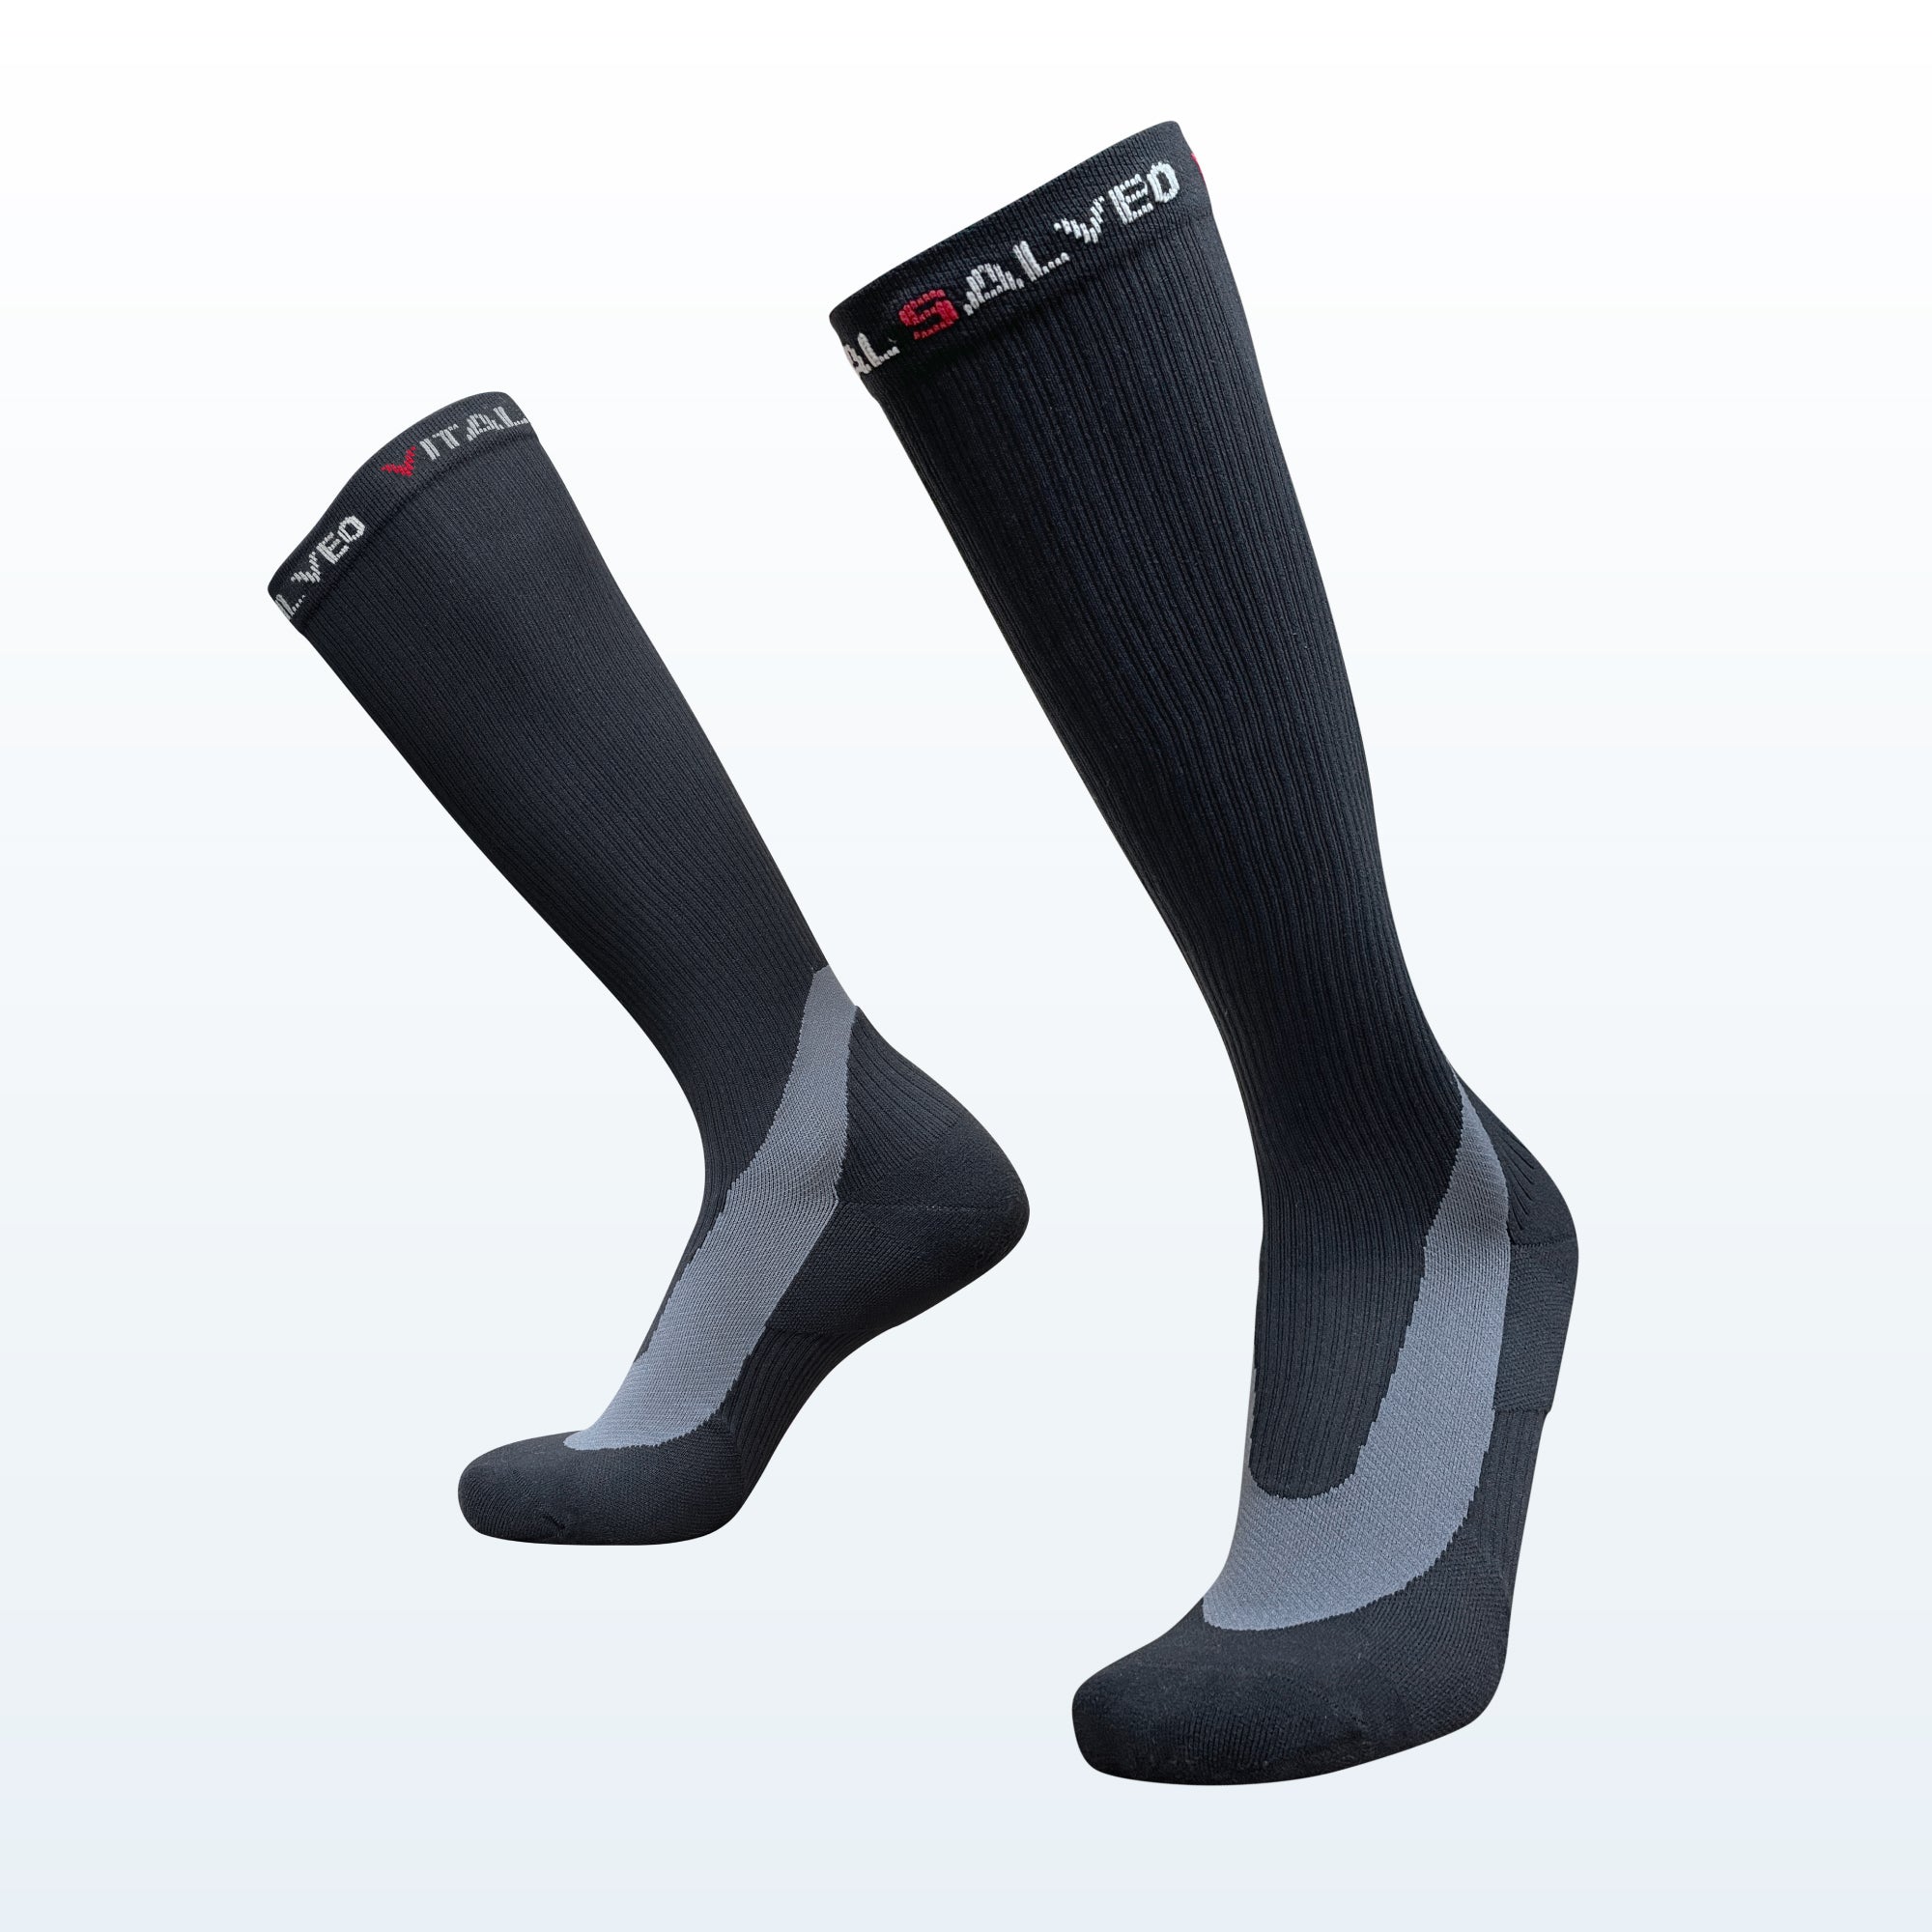 Arch Support Performance Compression Calf Socks - Vital Salveo